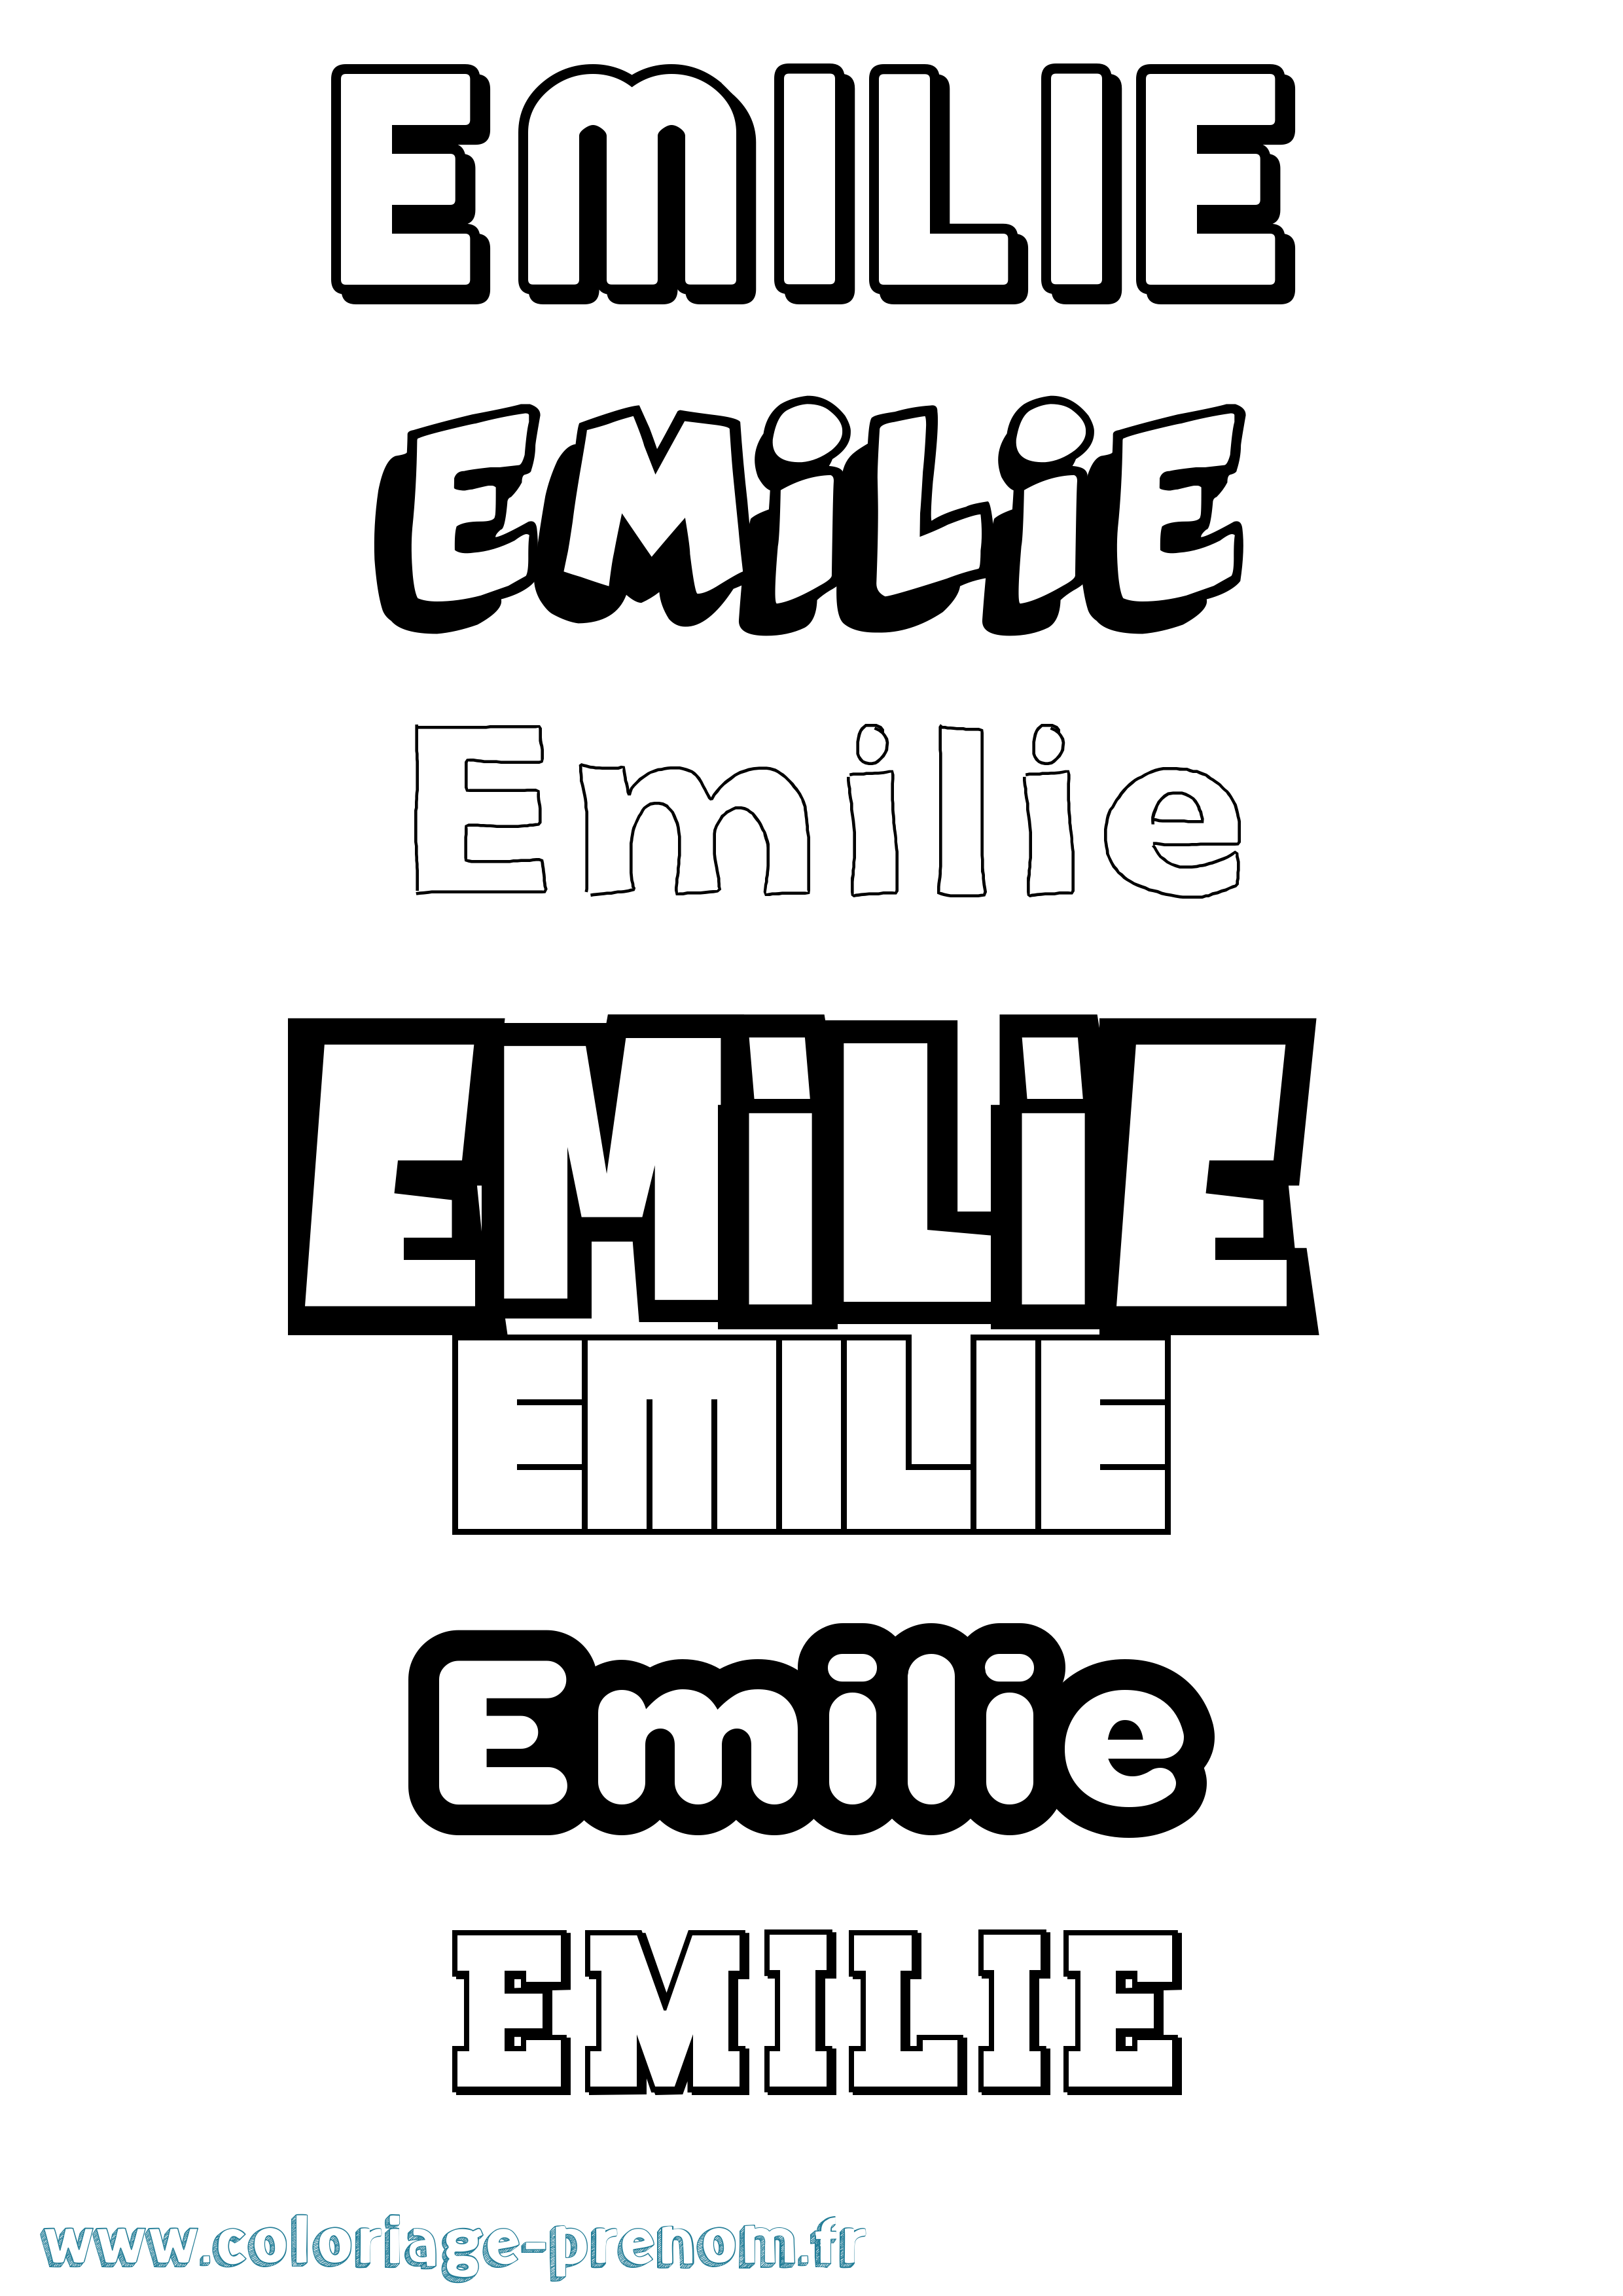 Coloriage prénom Emilie